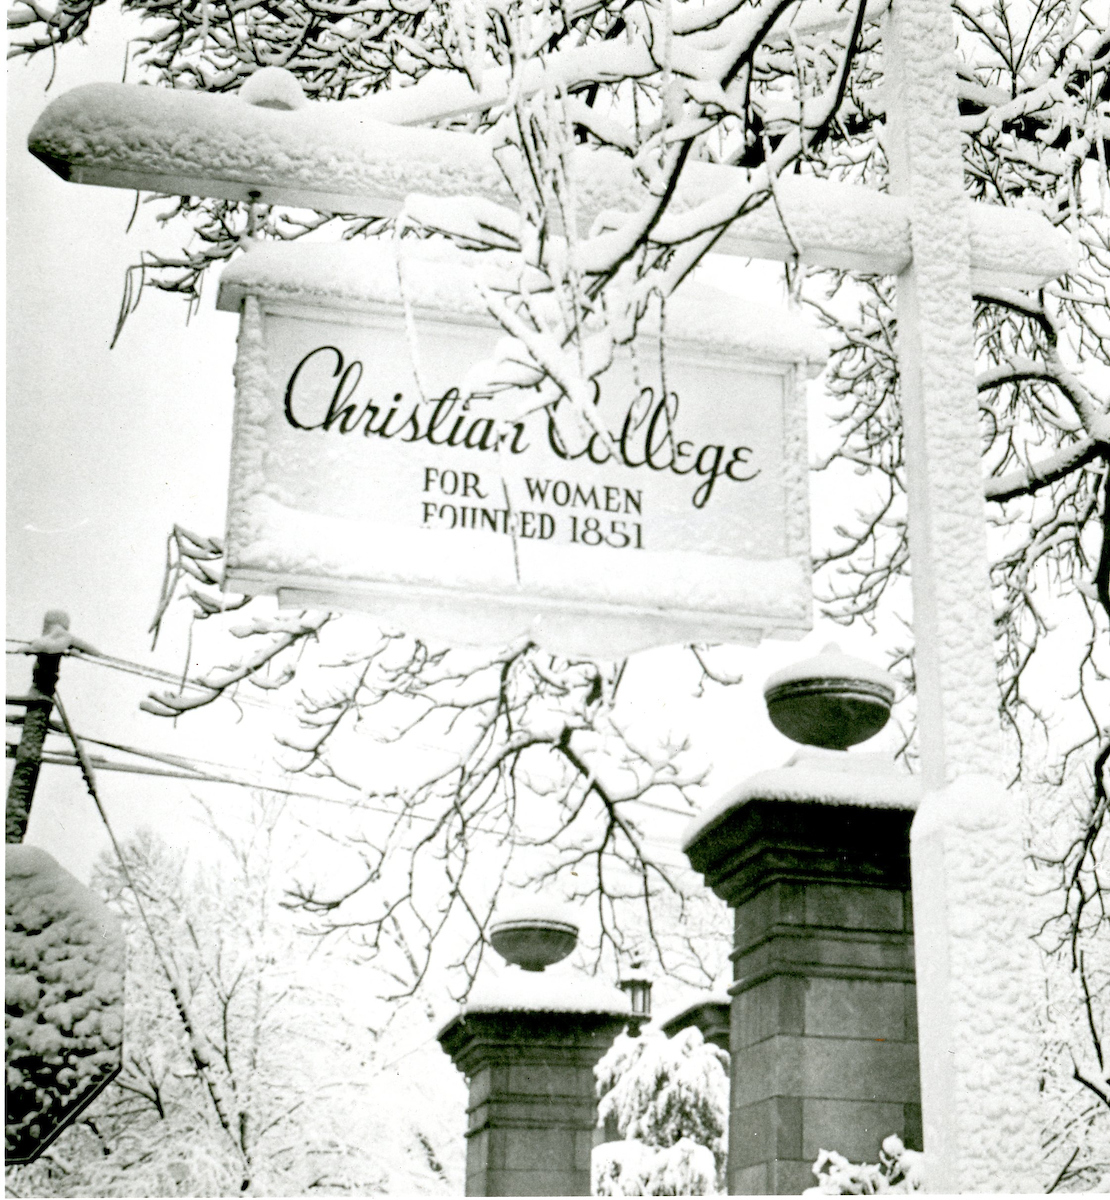 Hanging sign displaying Christian College.